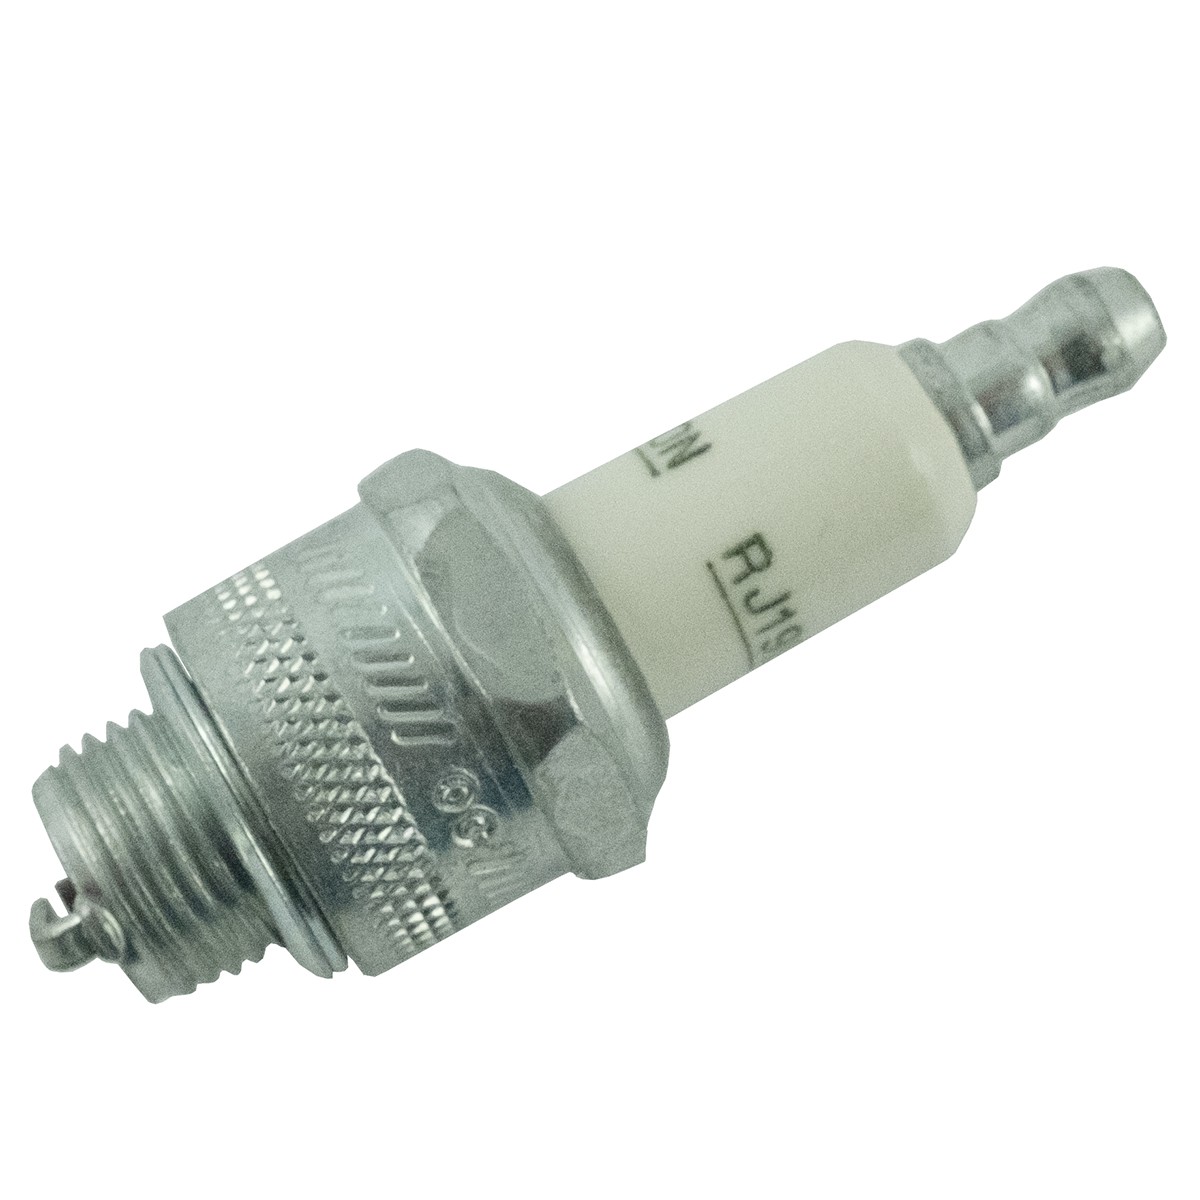 RJ19LM spark plug for Stiga 9400-0225-00 lawn mower